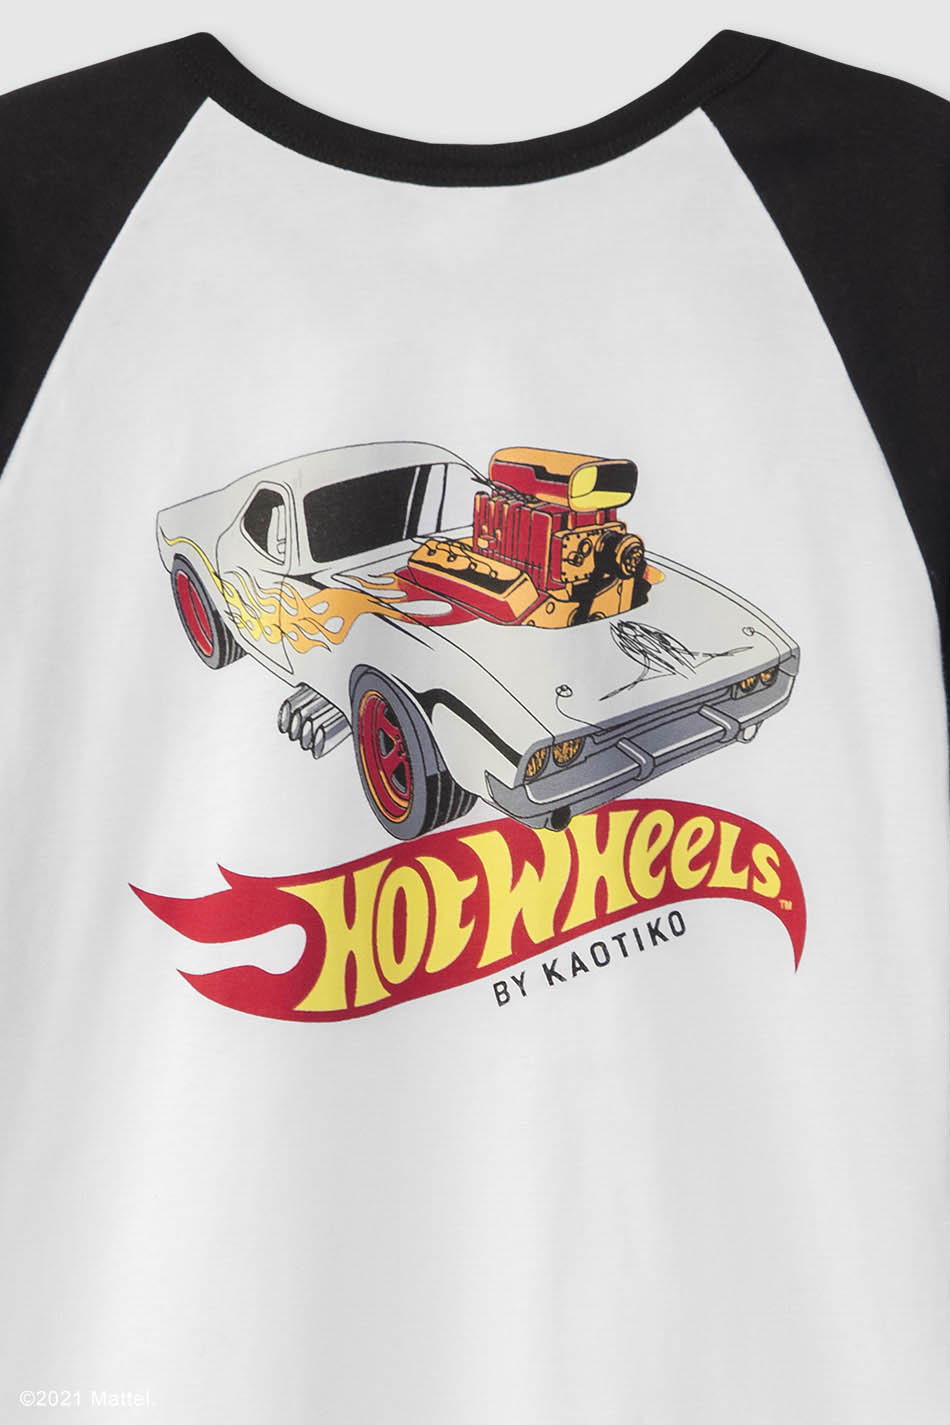 Hot Wheels T-shirt by Kaotiko